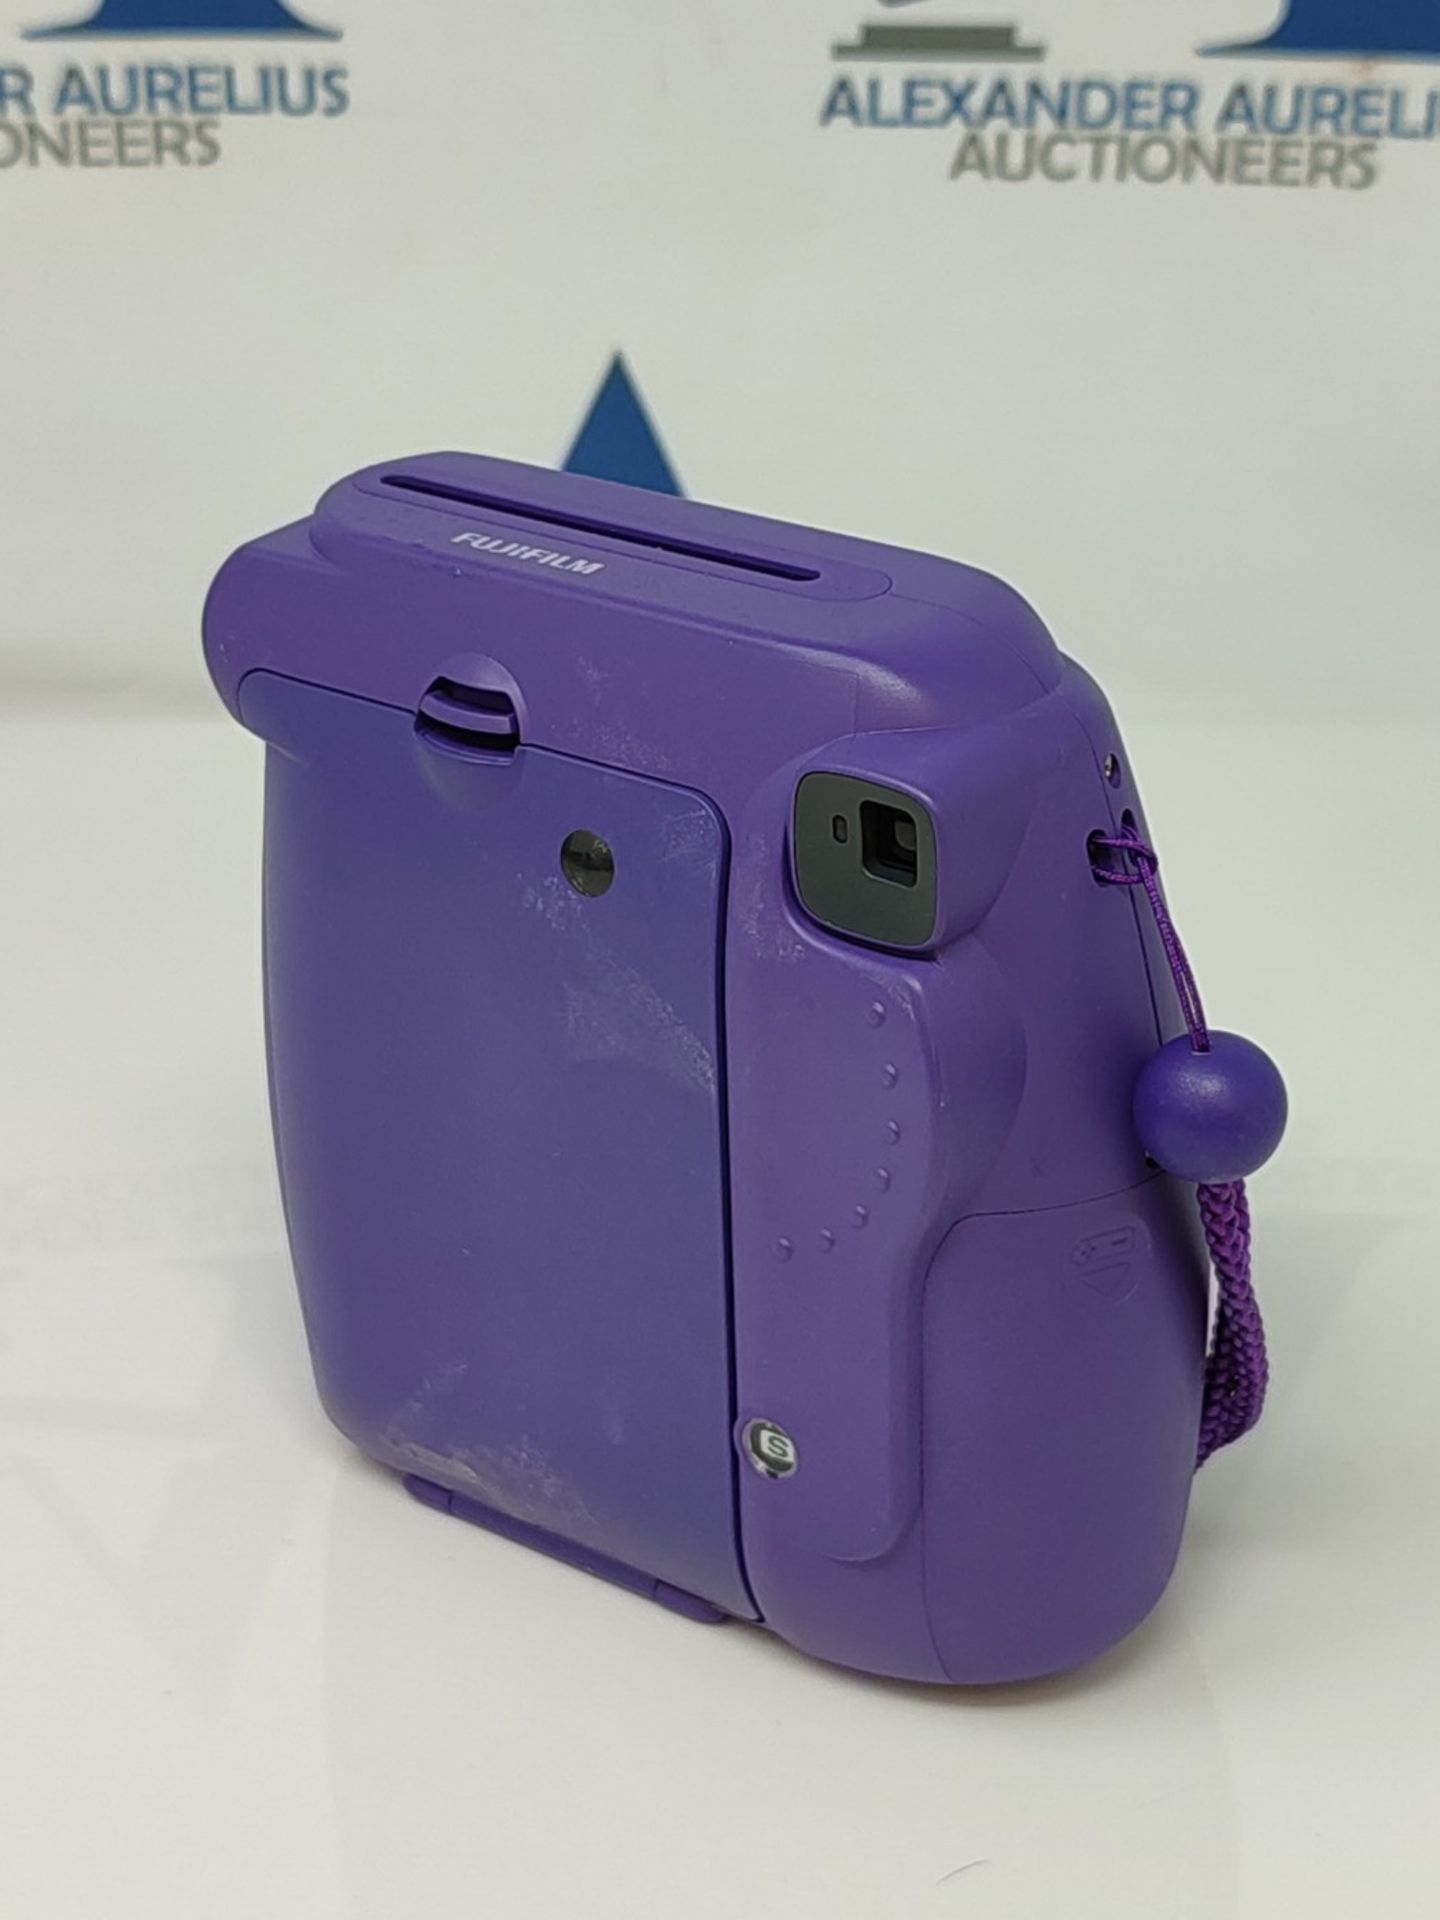 Instax Mini 8 Instant Film Print Camera Purple - Image 3 of 3